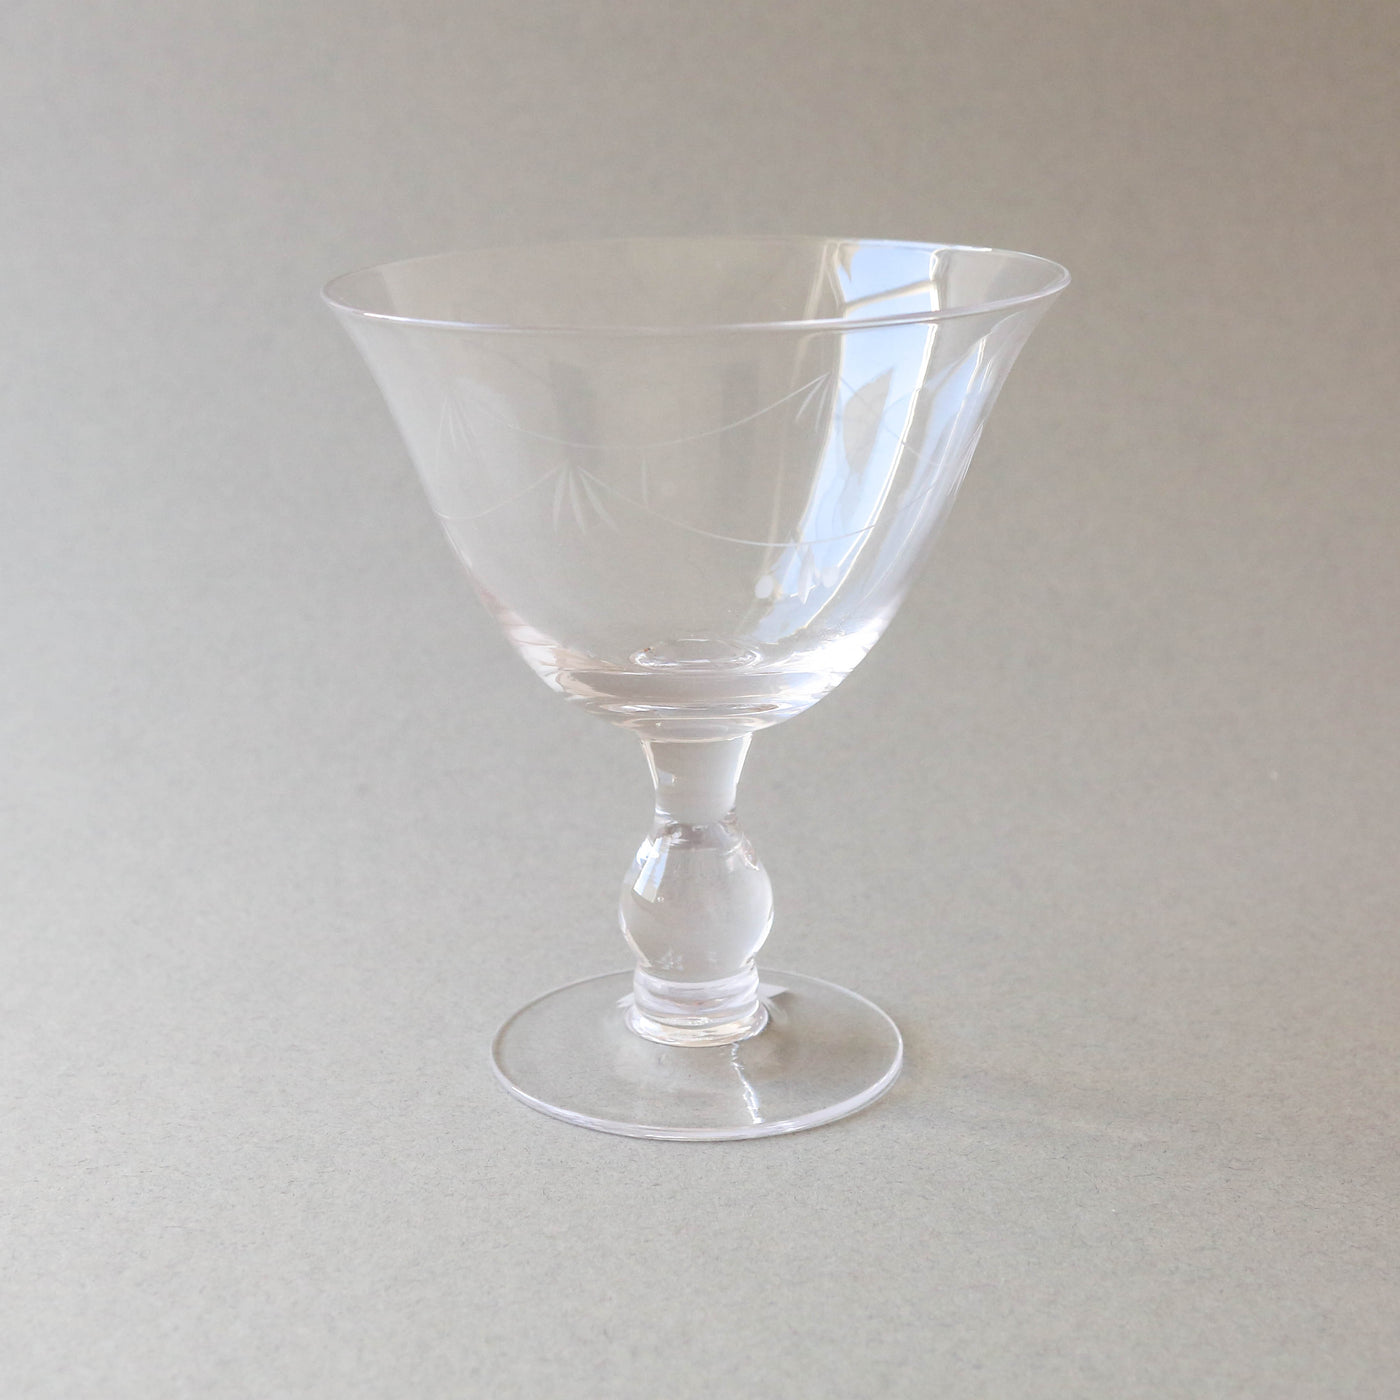 Etched Vintage Style Dessert Glass